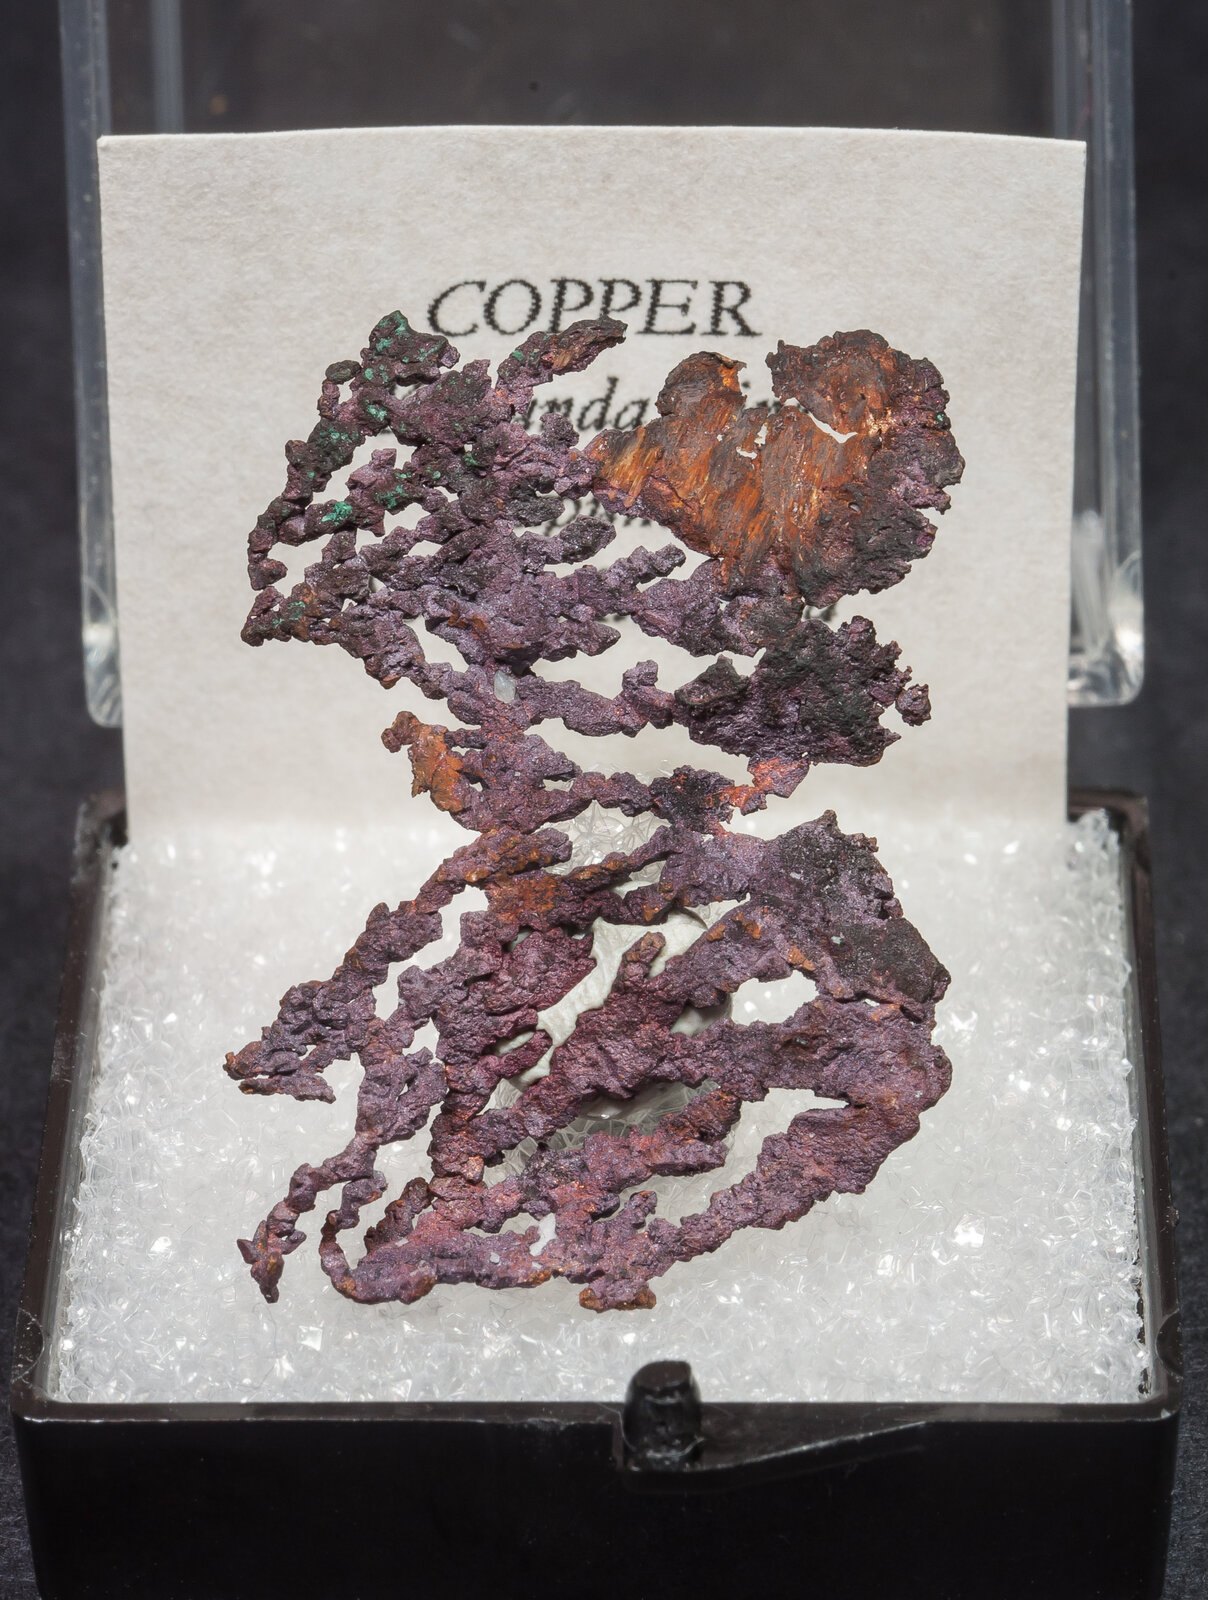 specimens/s_imagesAM6/Copper-MJ13AM6f.jpg